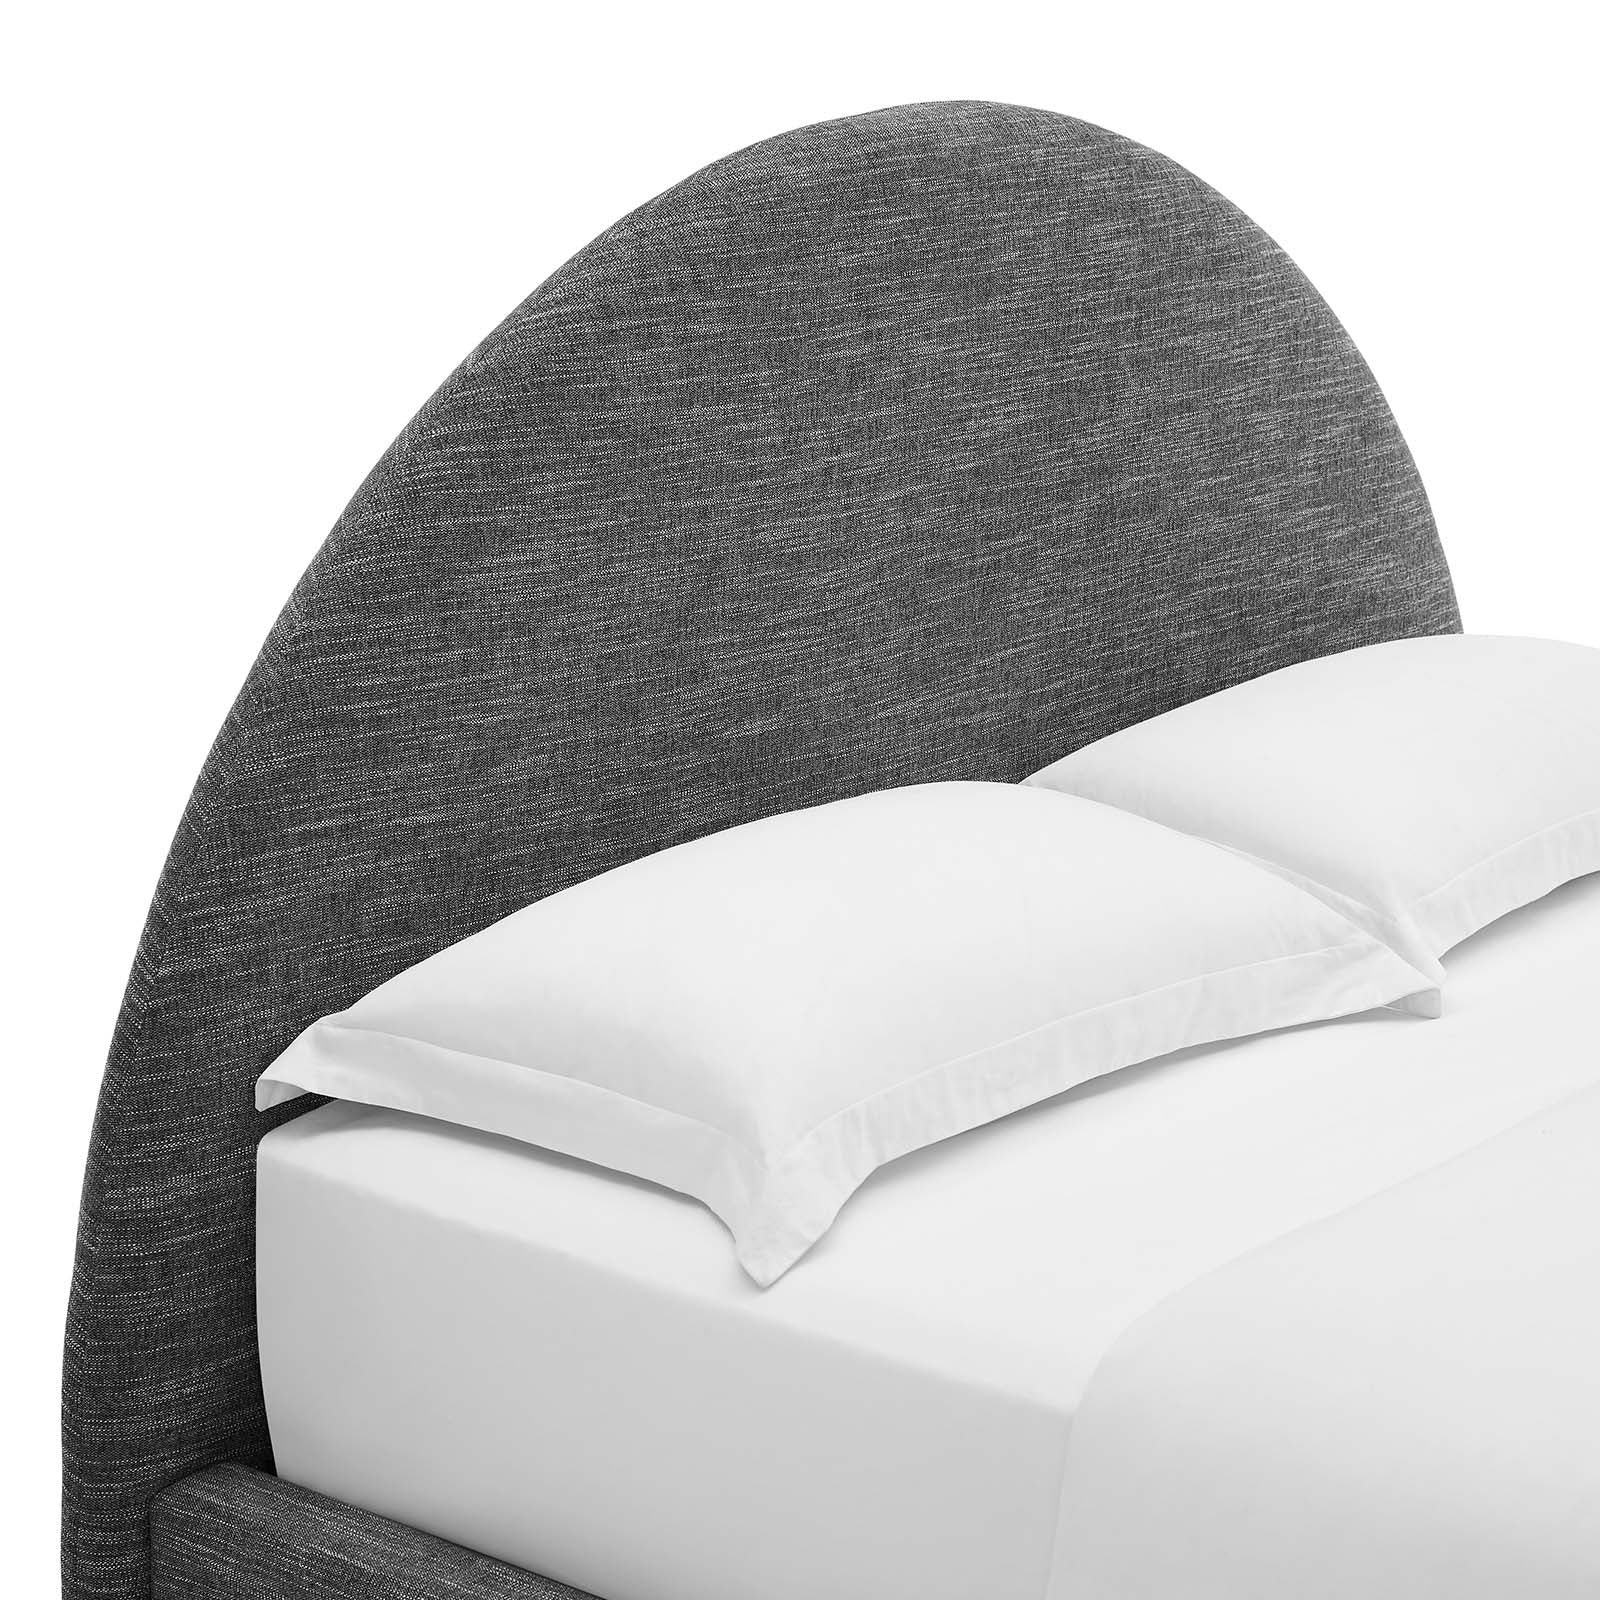 Resort Upholstered Fabric Arched Round King Platform Bed